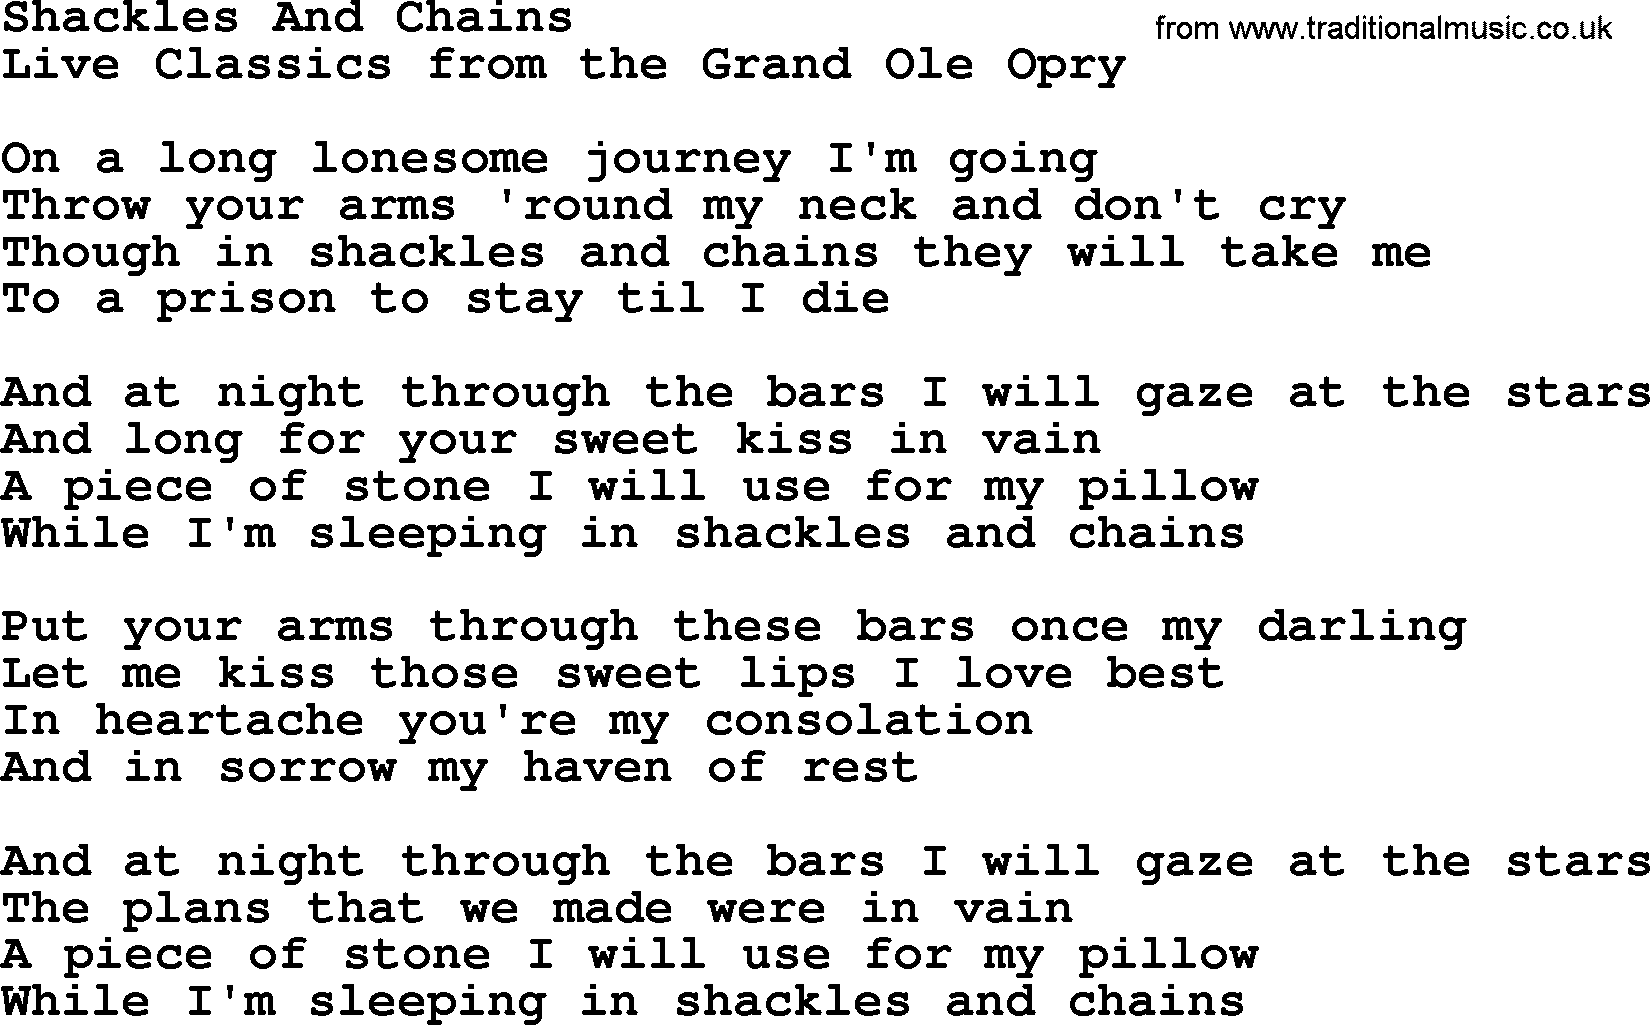 Marty Robbins song: Shackles And Chains, lyrics